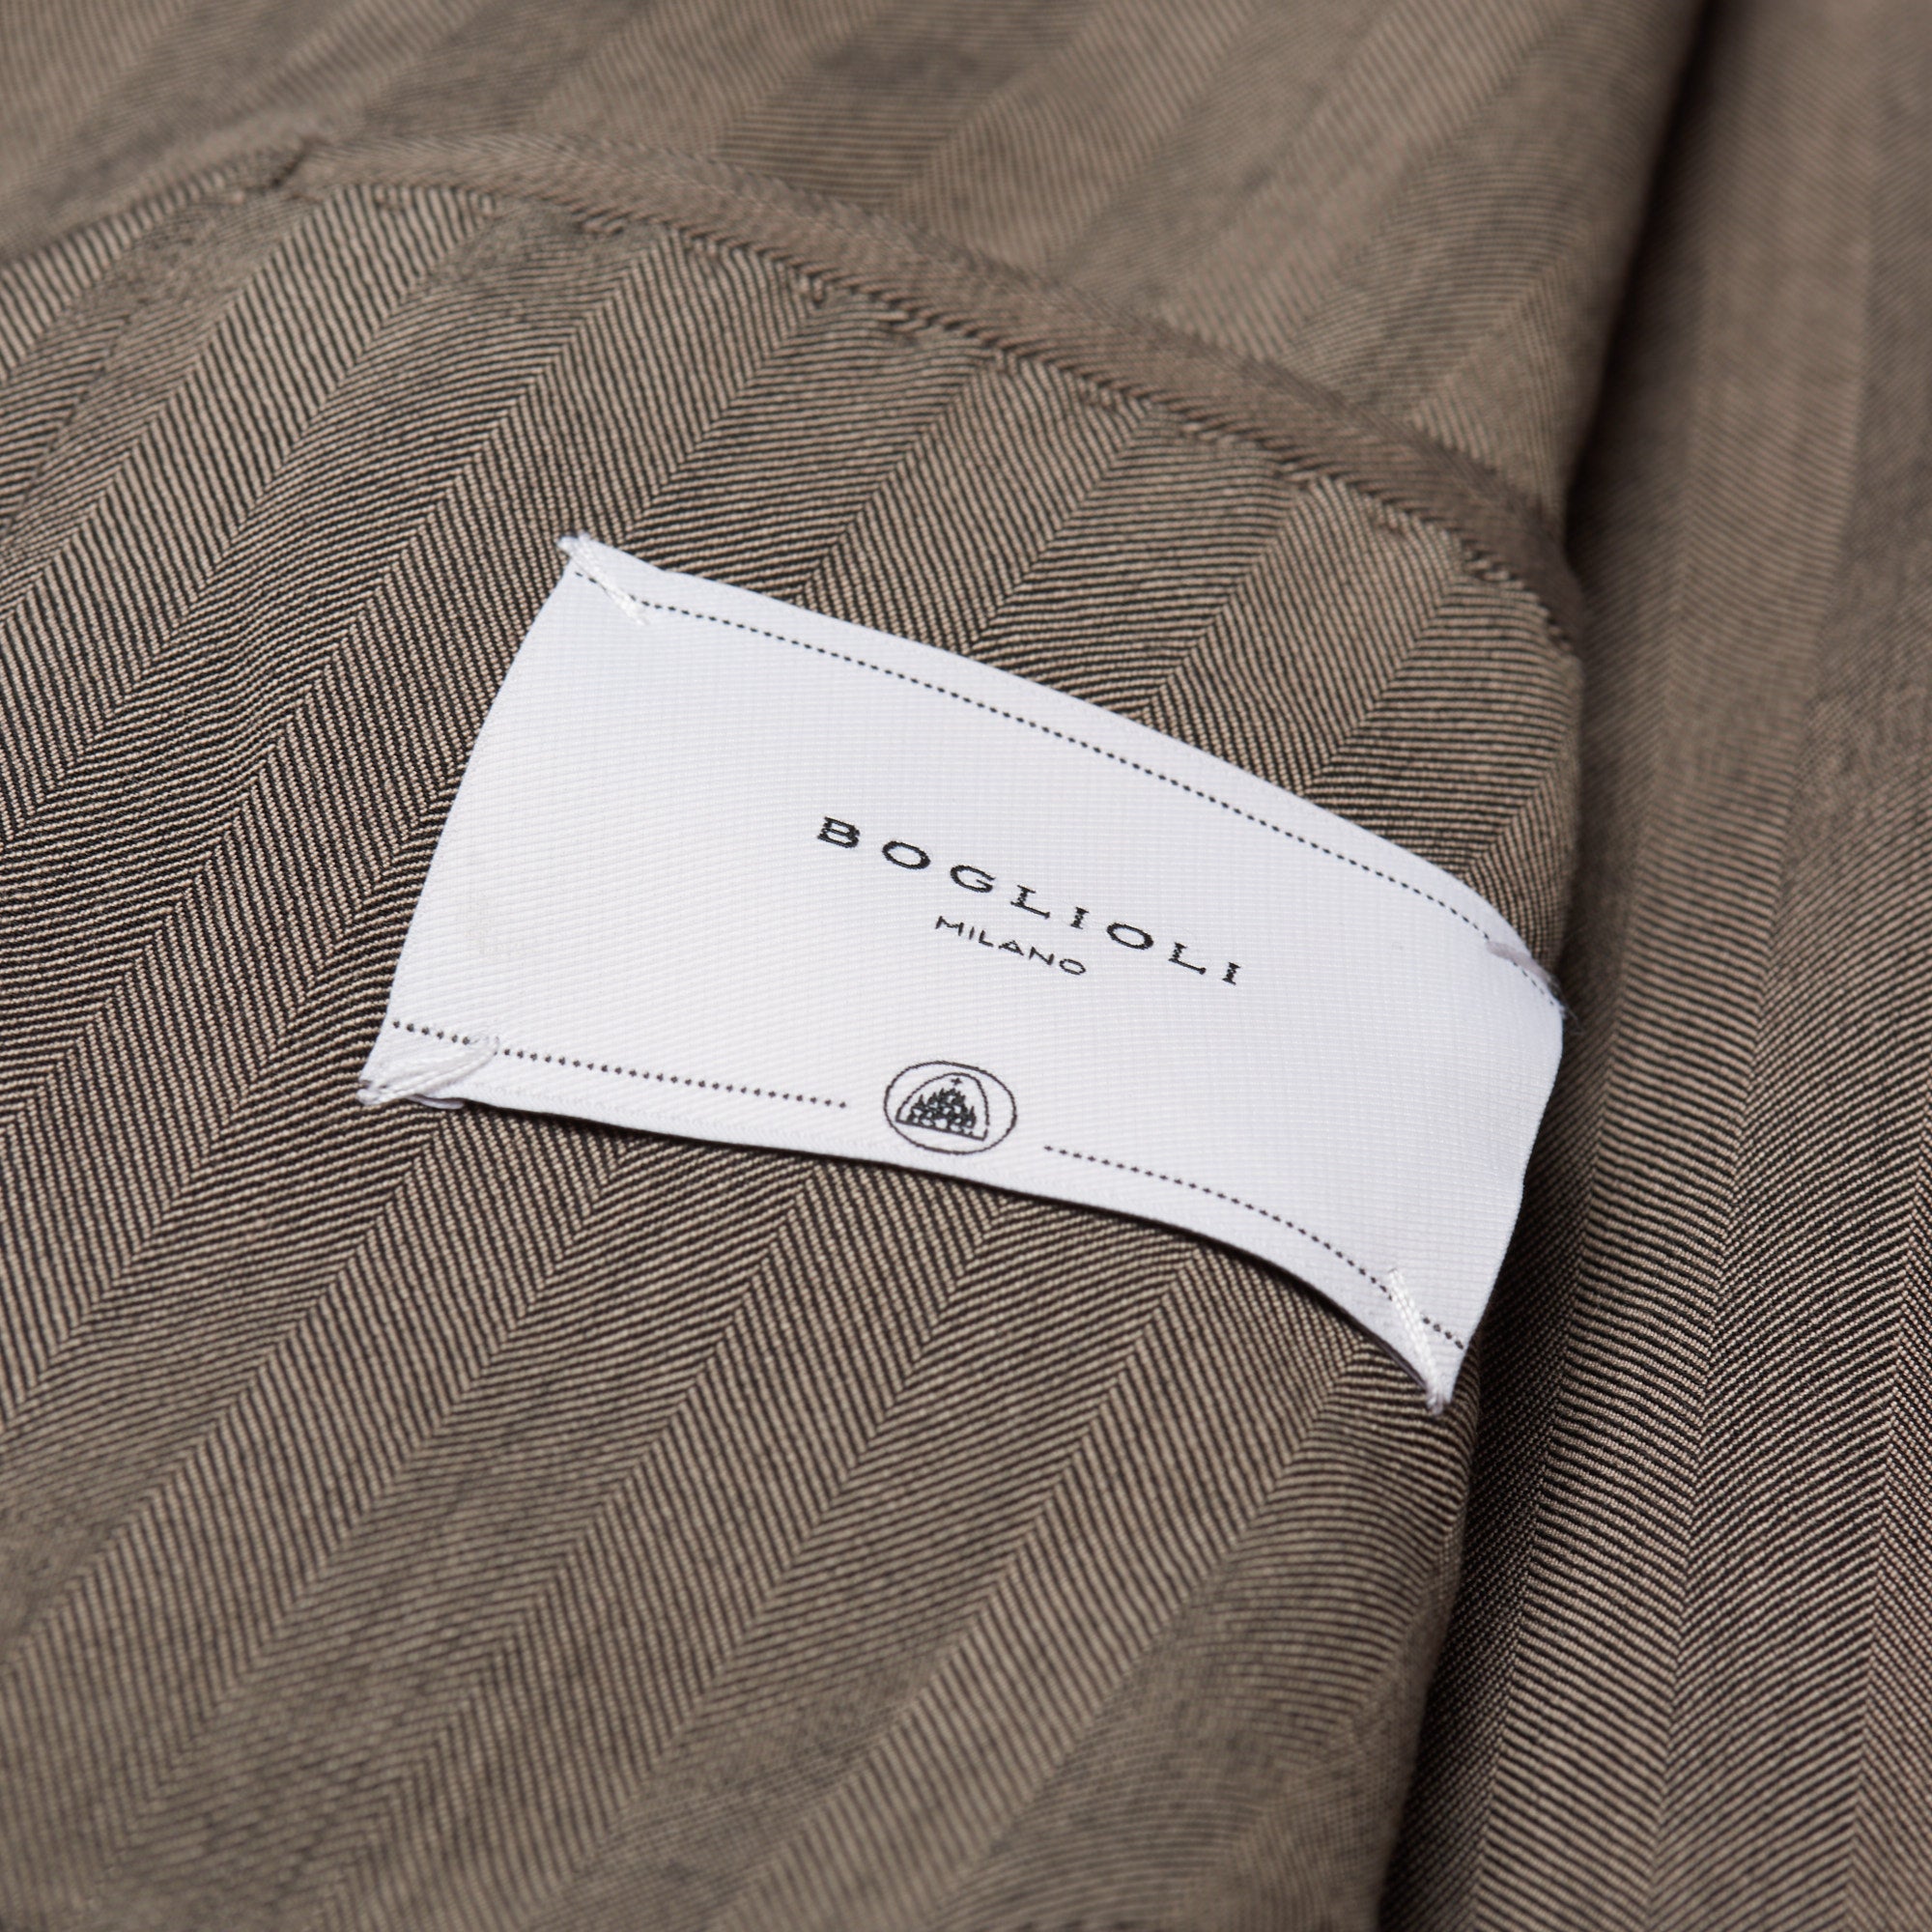 BOGLIOLI "K.Jacket" Gray Herringbone Wool Unlined Jacket EU 50 NEW US 40 Short Fit BOGLIOLI